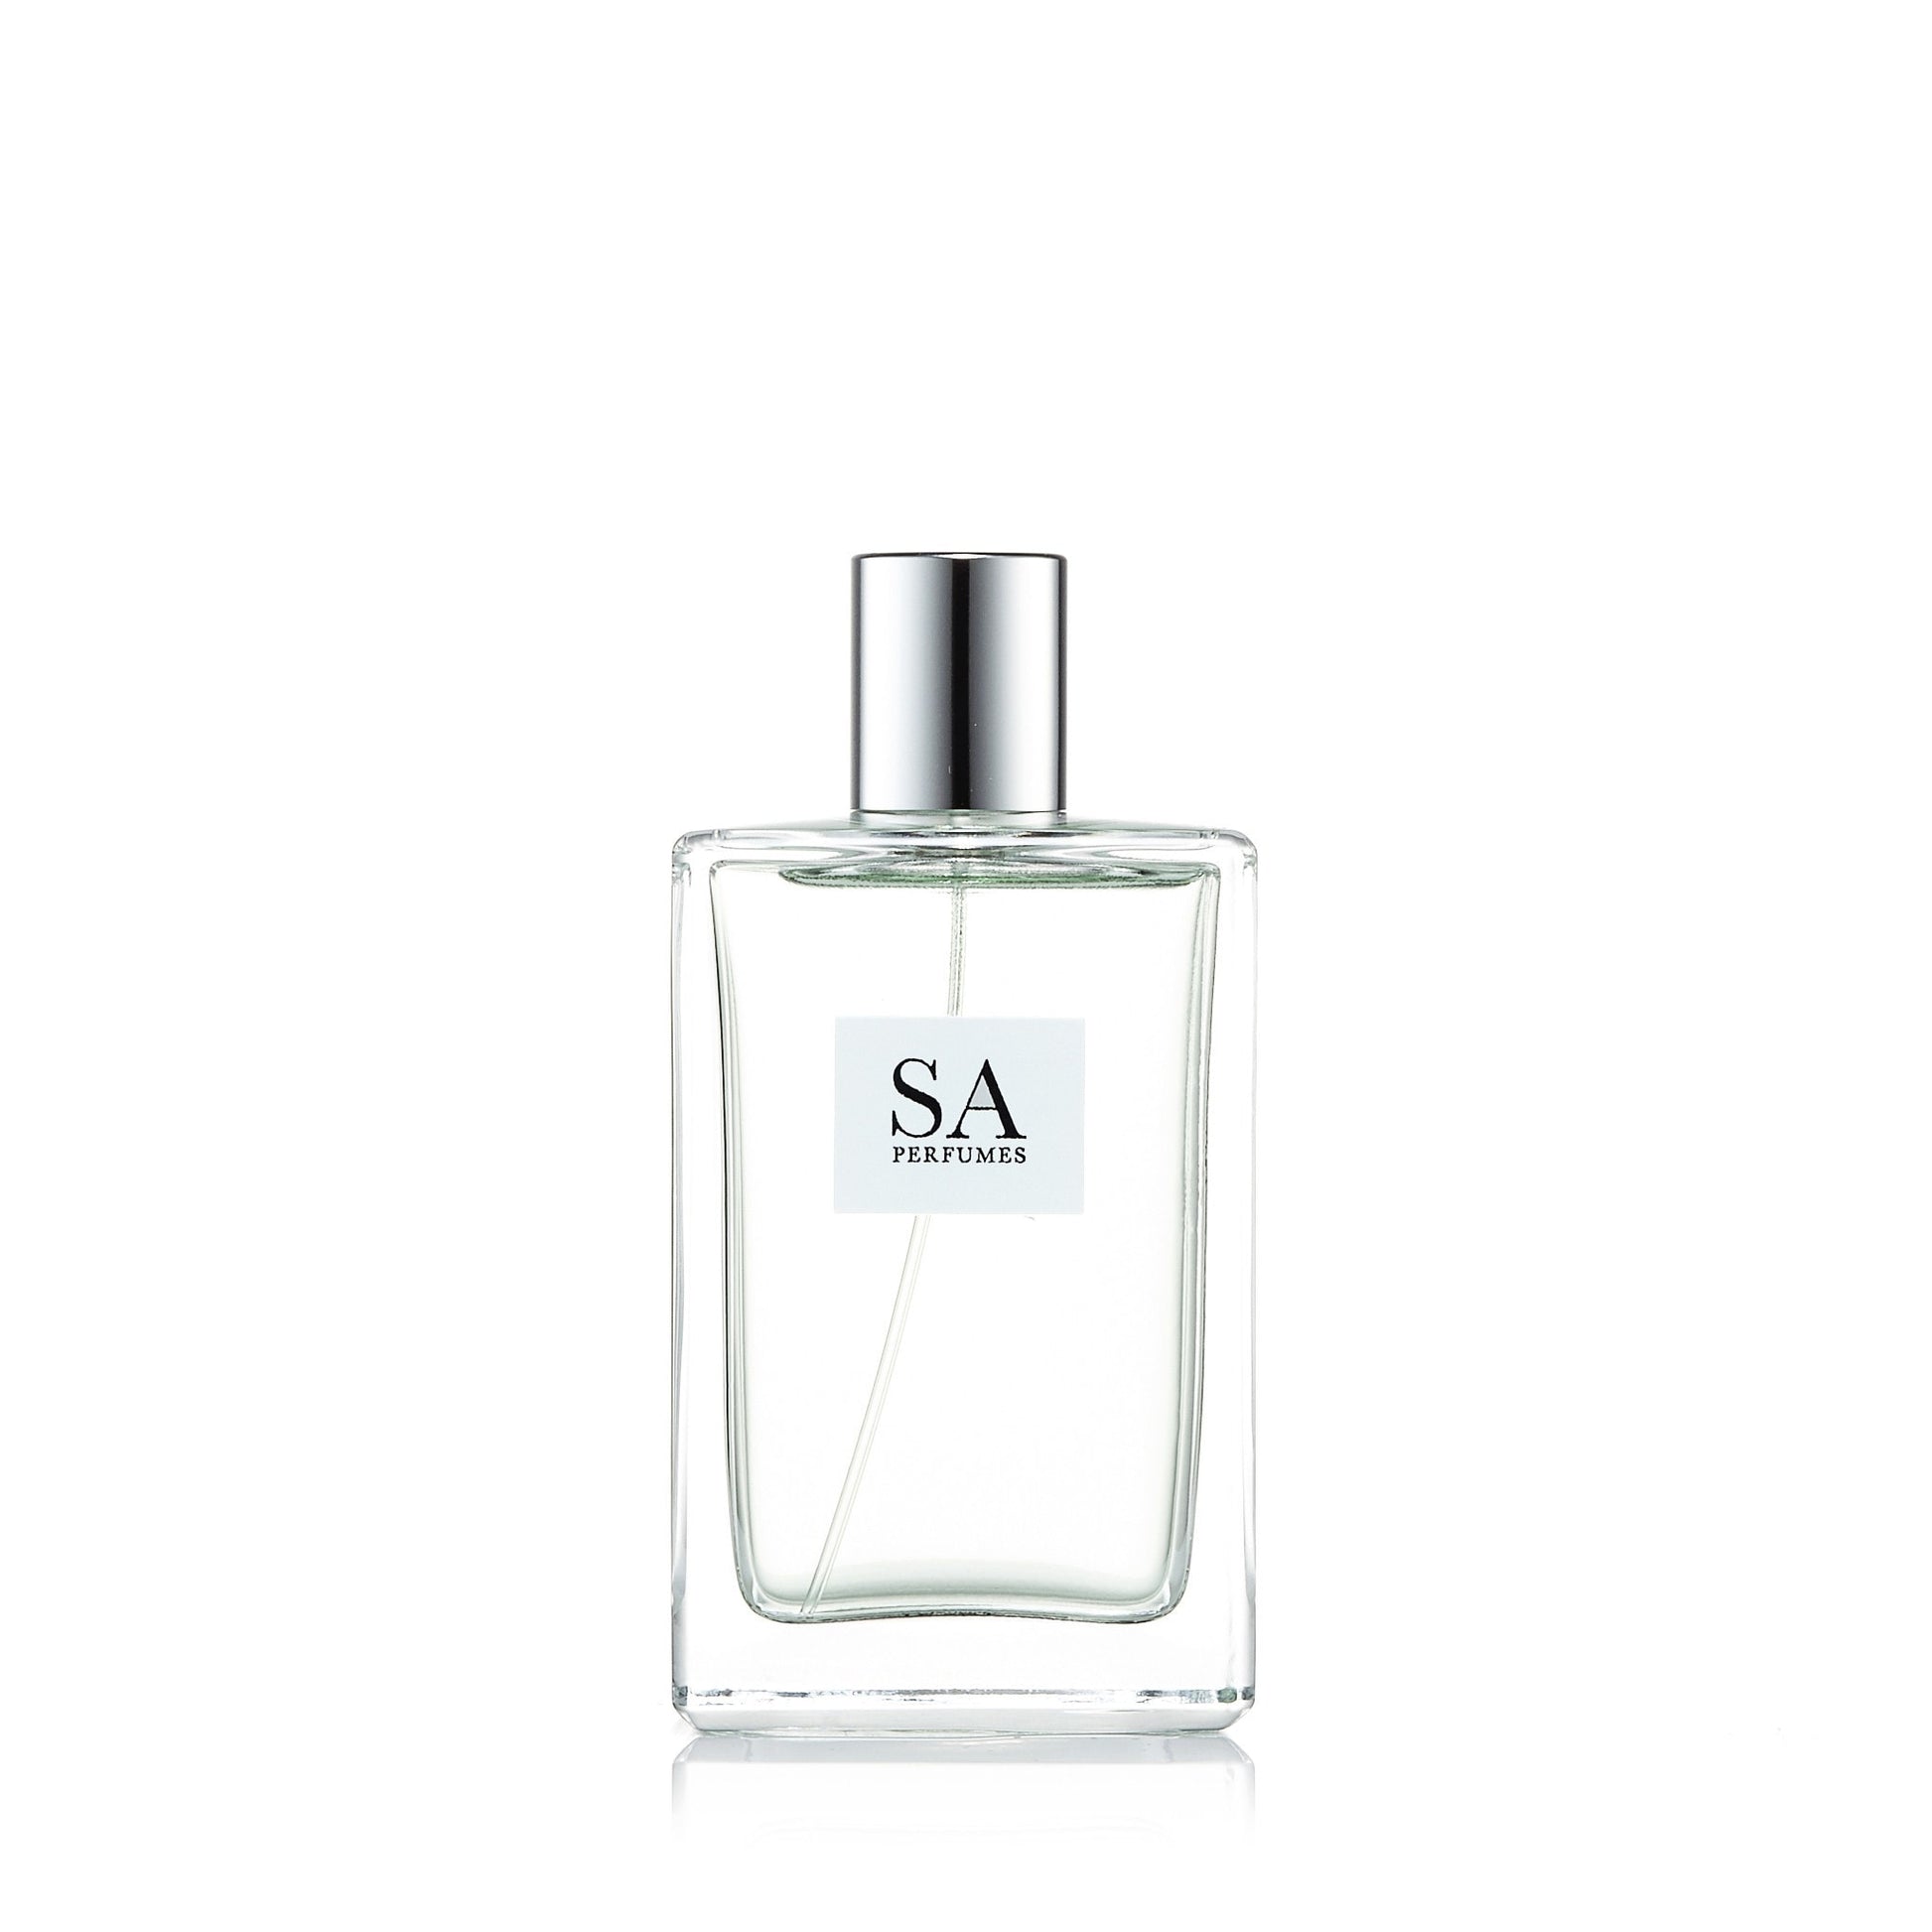 Sa Perfumes Eau de Parfum Spray for Men, Product image 1